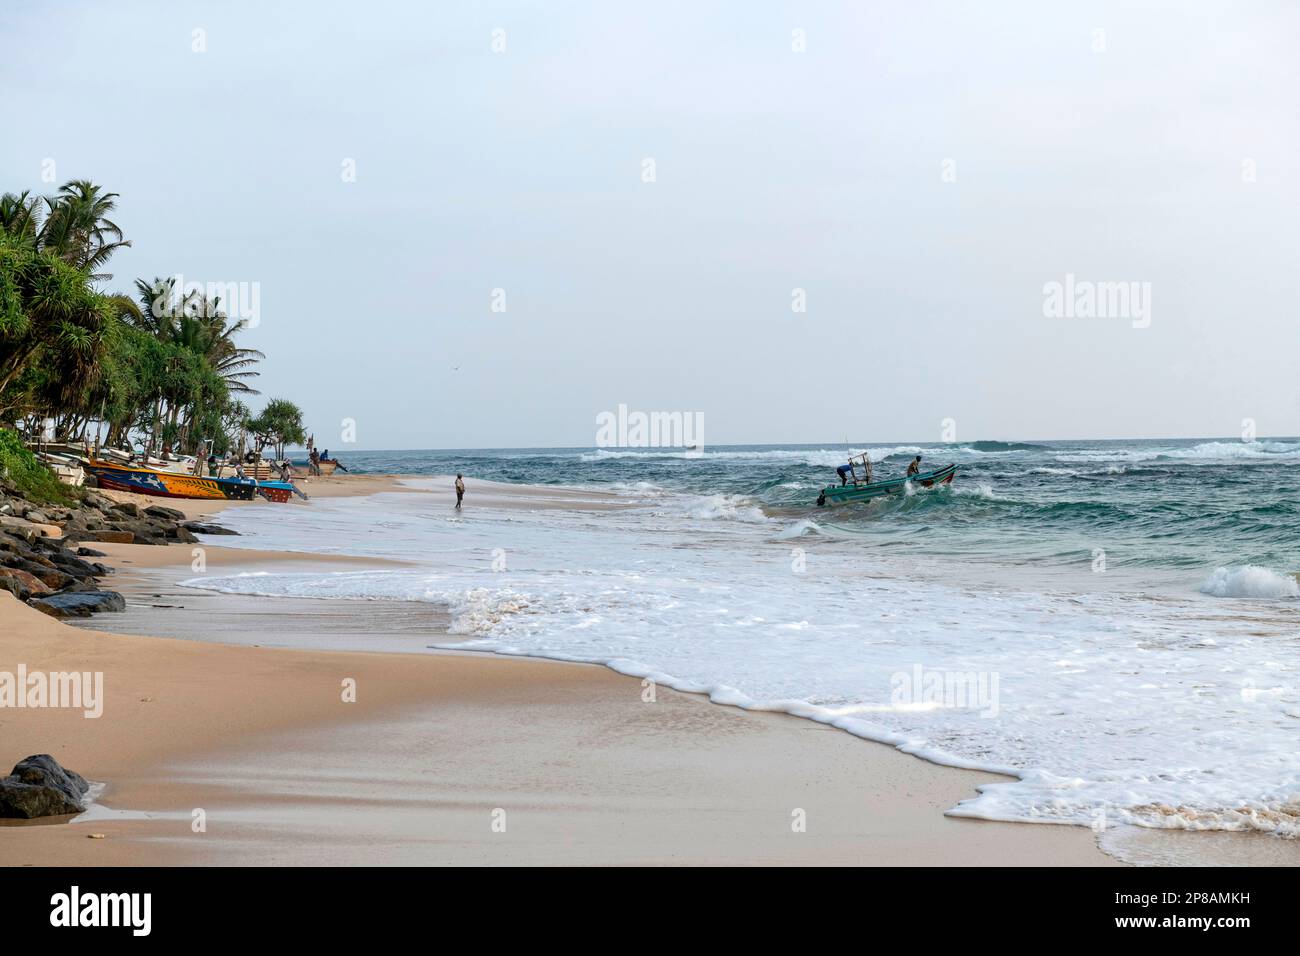 Sri Lanka, Provincia meridionale, Sud, Süd, Sud, océan, Ozean, oceano, plage, Strand, spiaggia, bateau de pêche, bateaux de pêche, Fischerboot, Fischerboote Foto Stock